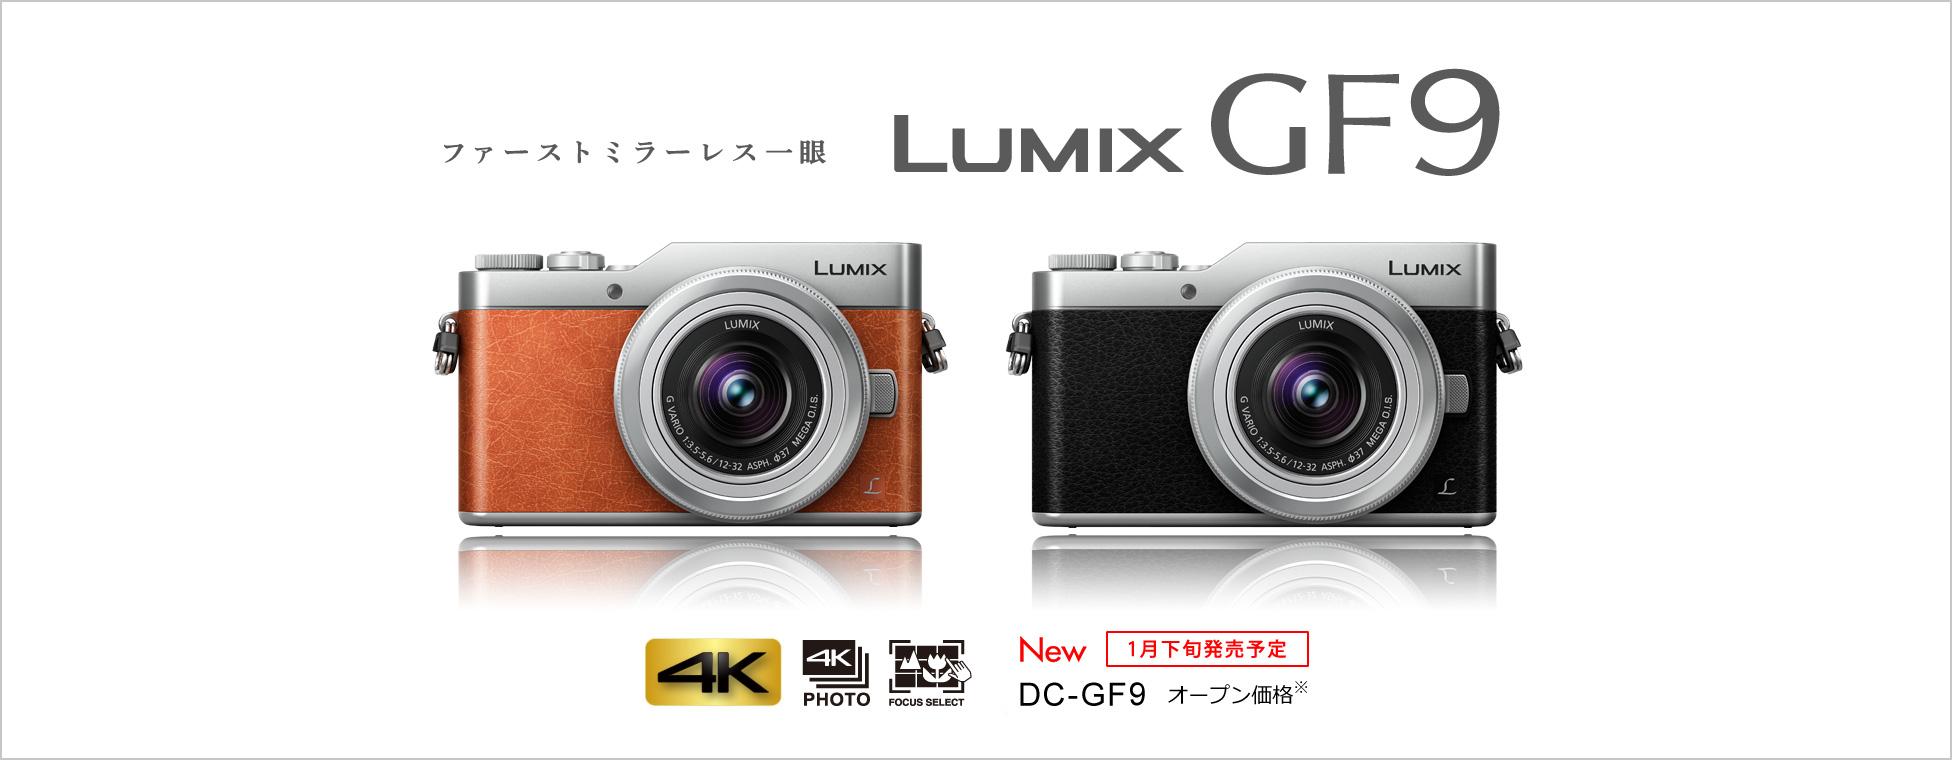 Panasonic Lumix GF9